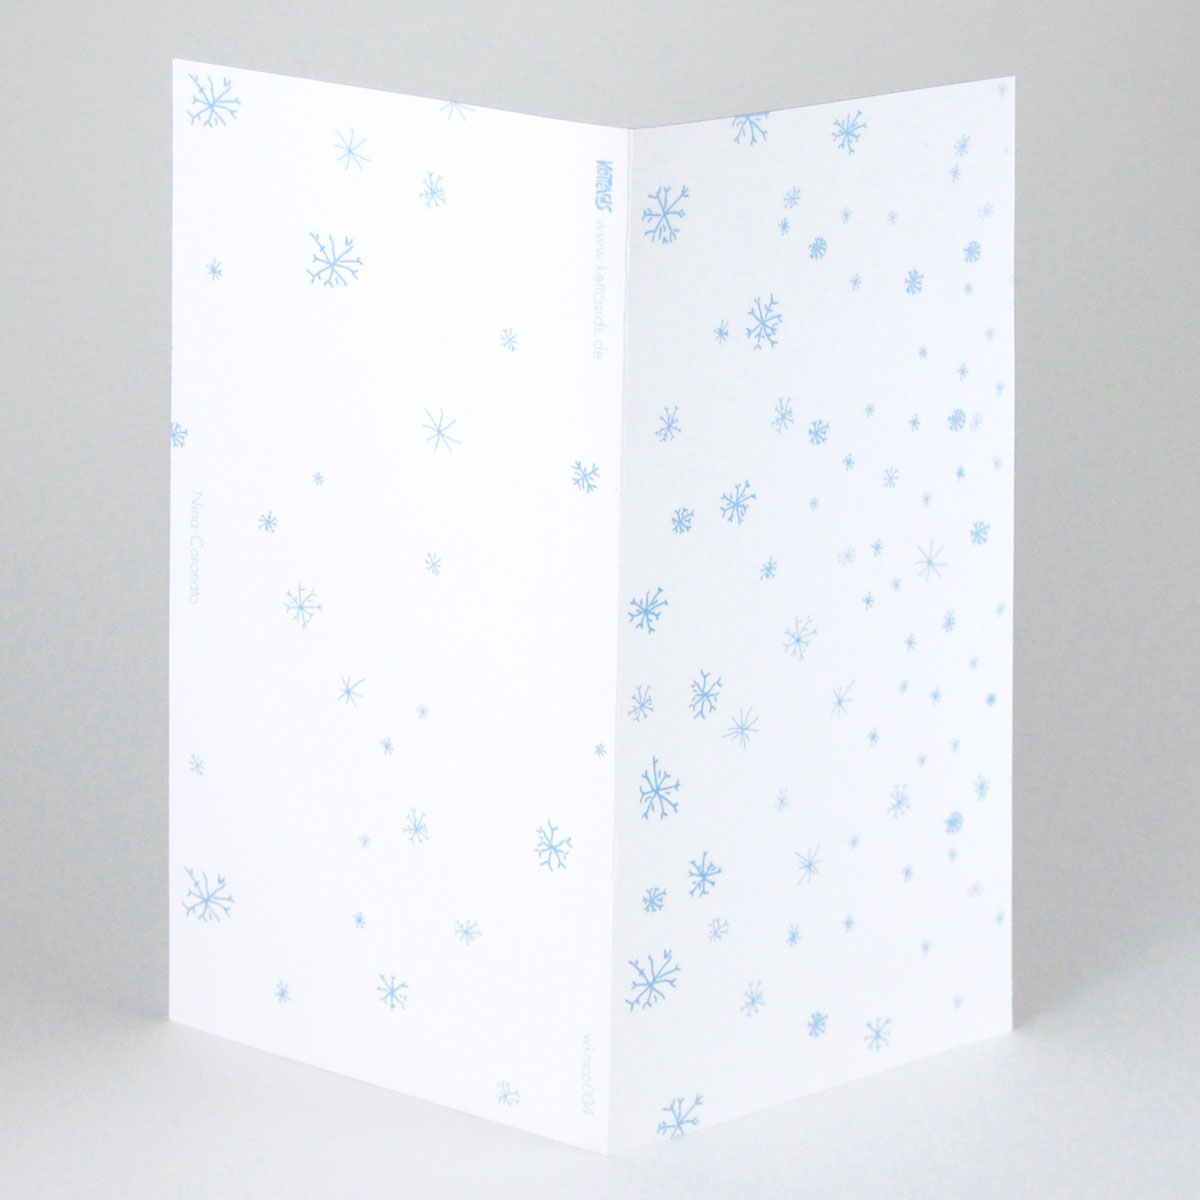 Christmas Cards: Snowflakes